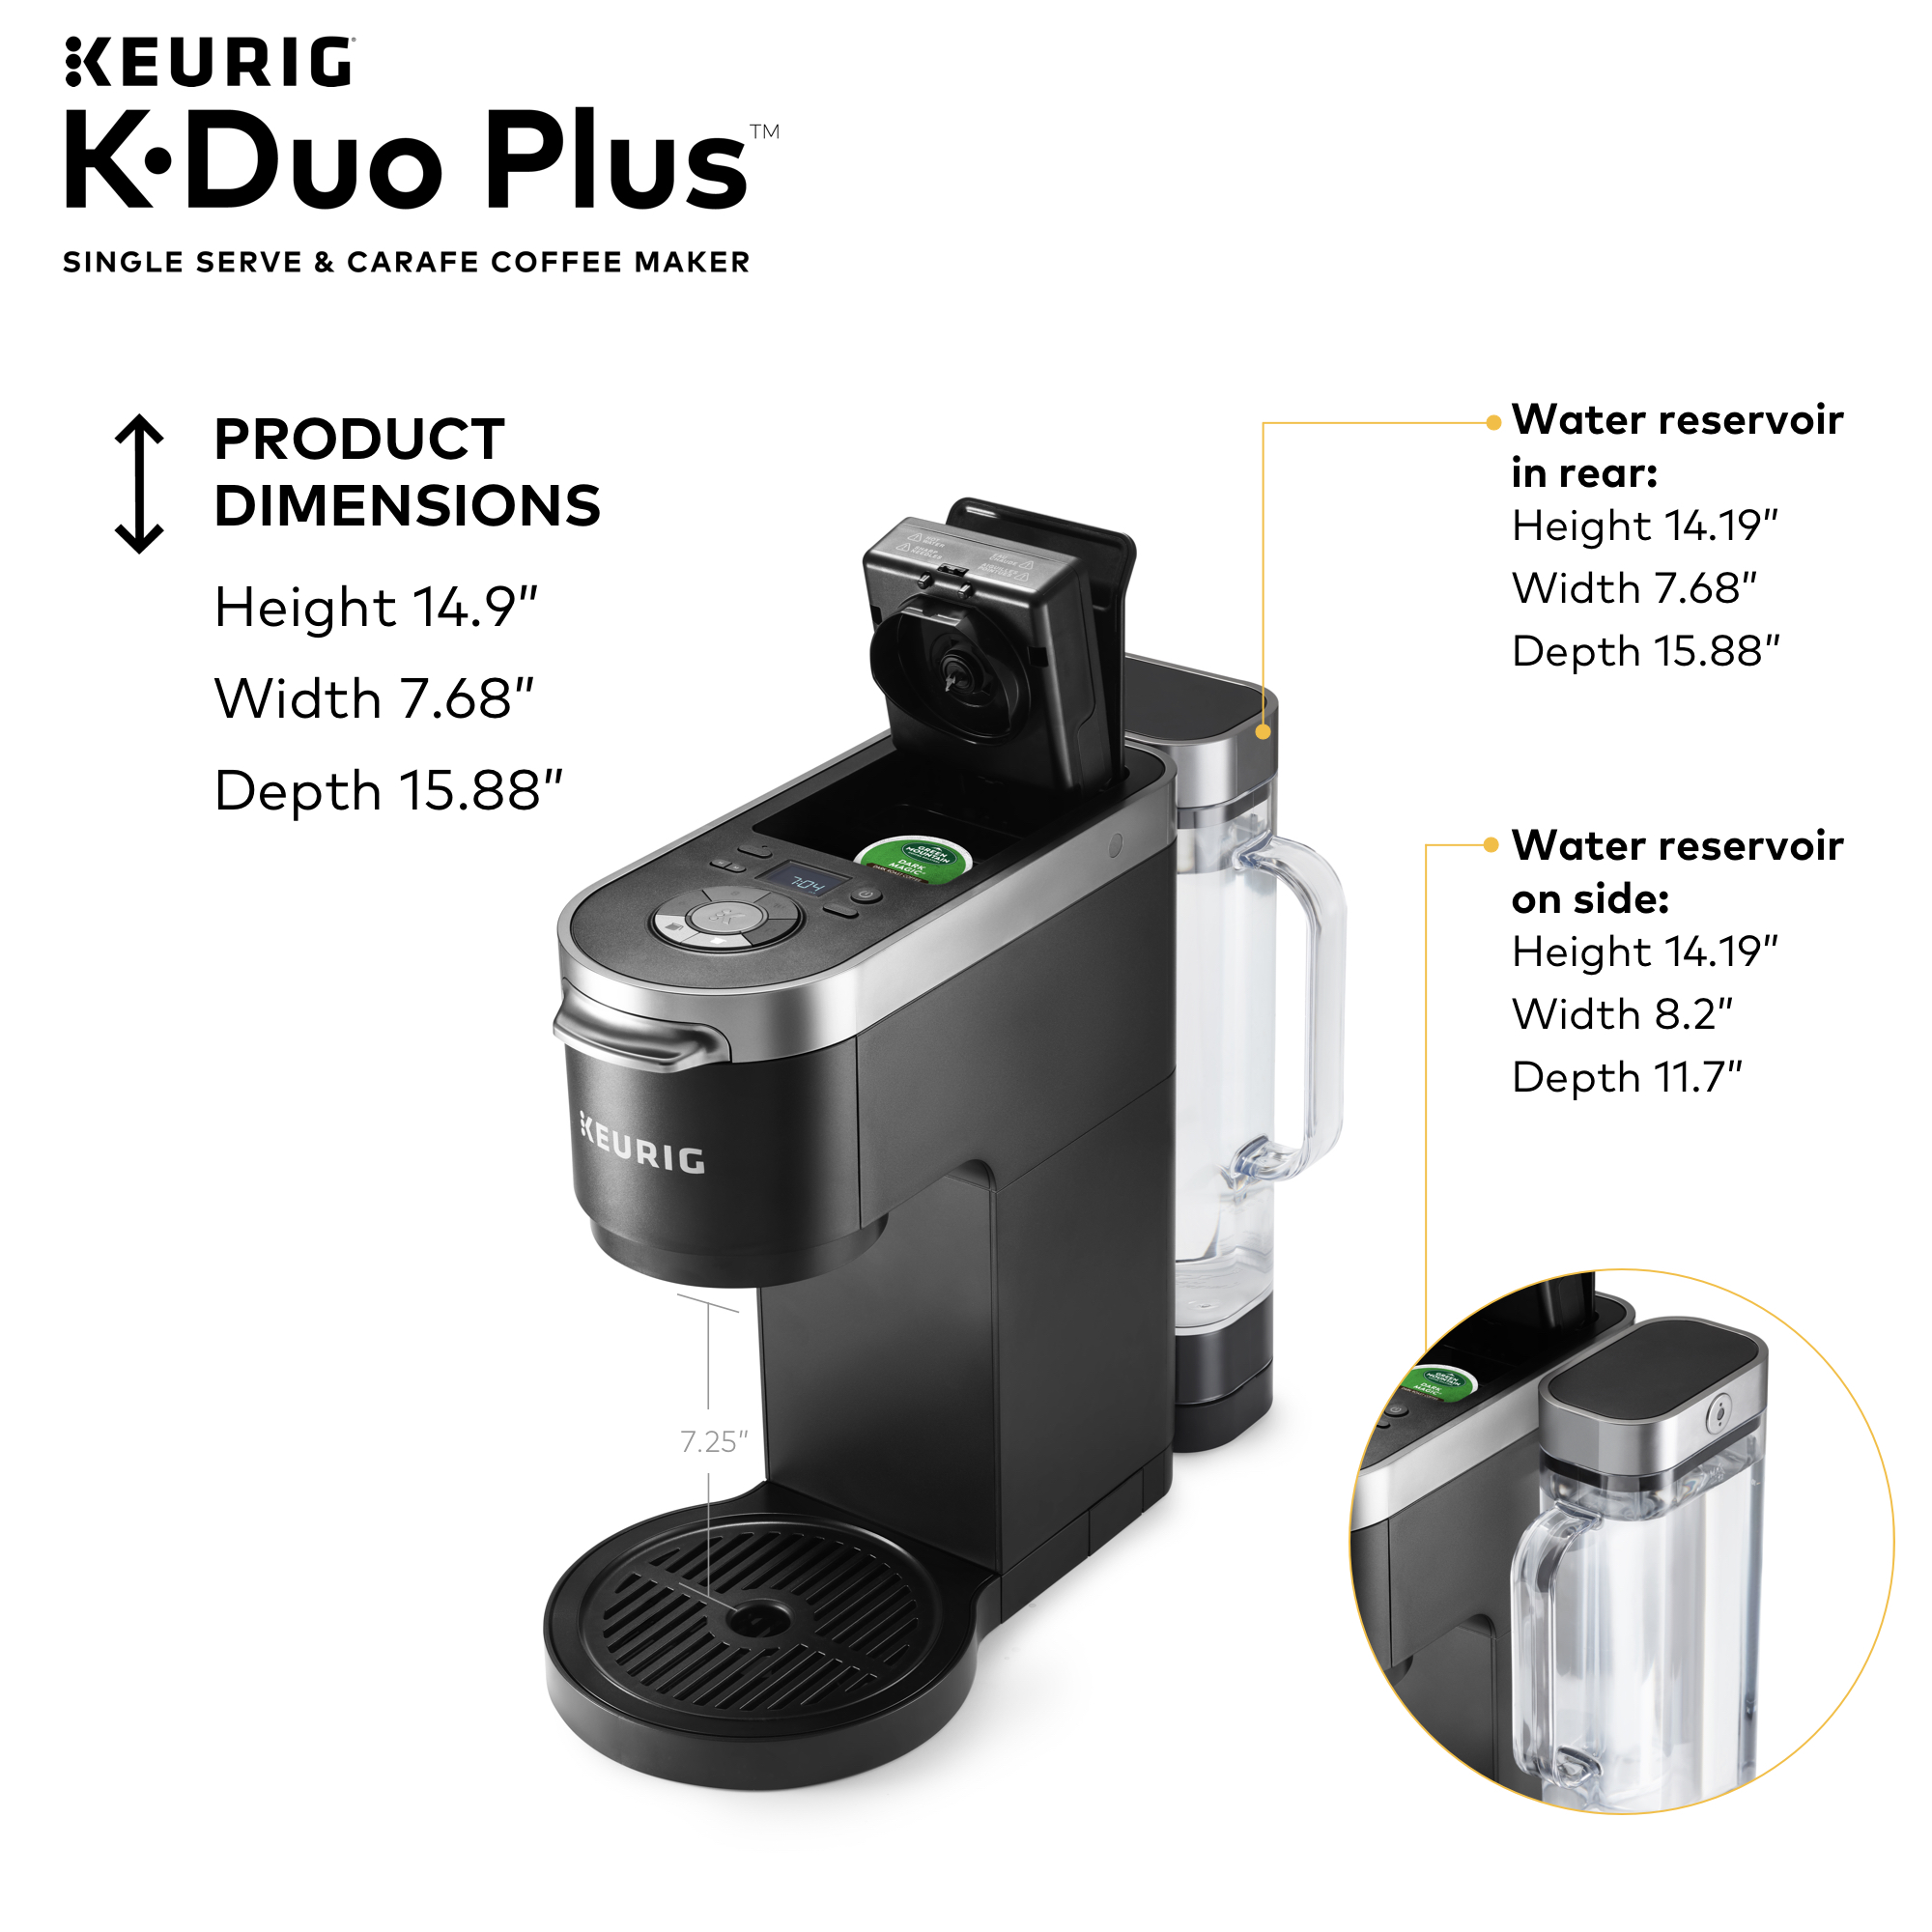 Keurig K-Duo Plus Single Serve & Carafe Coffee Maker - image 4 of 25